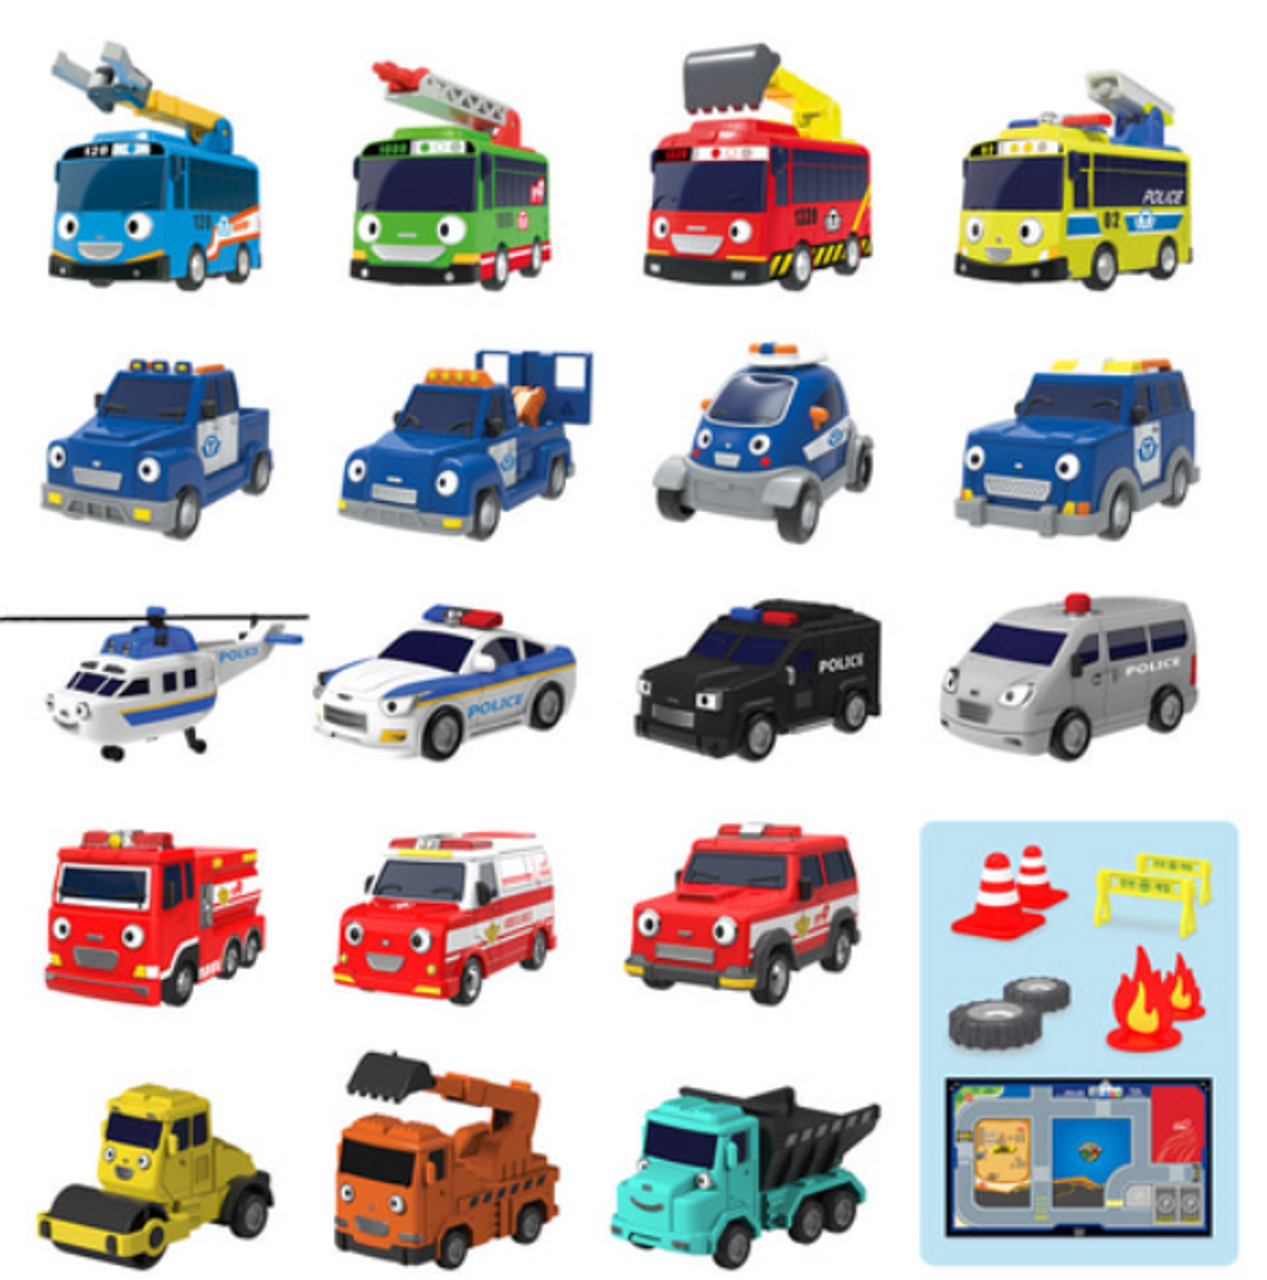 Miniature Team Bus